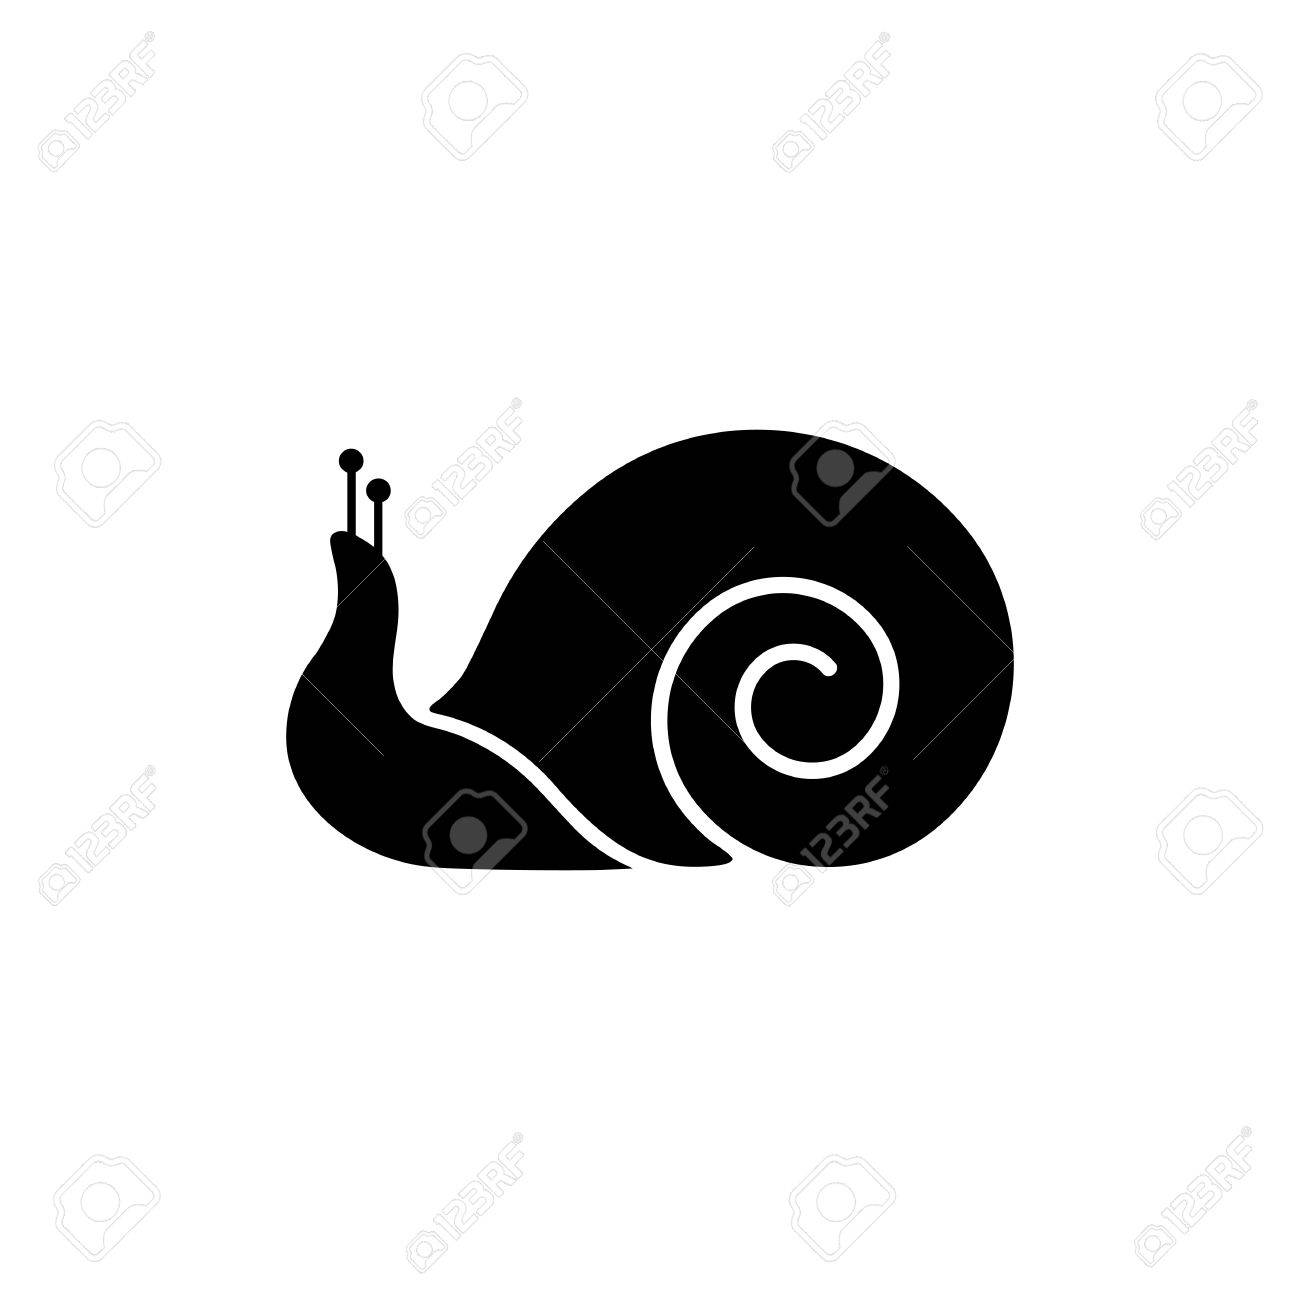 Snail icons | Noun Project